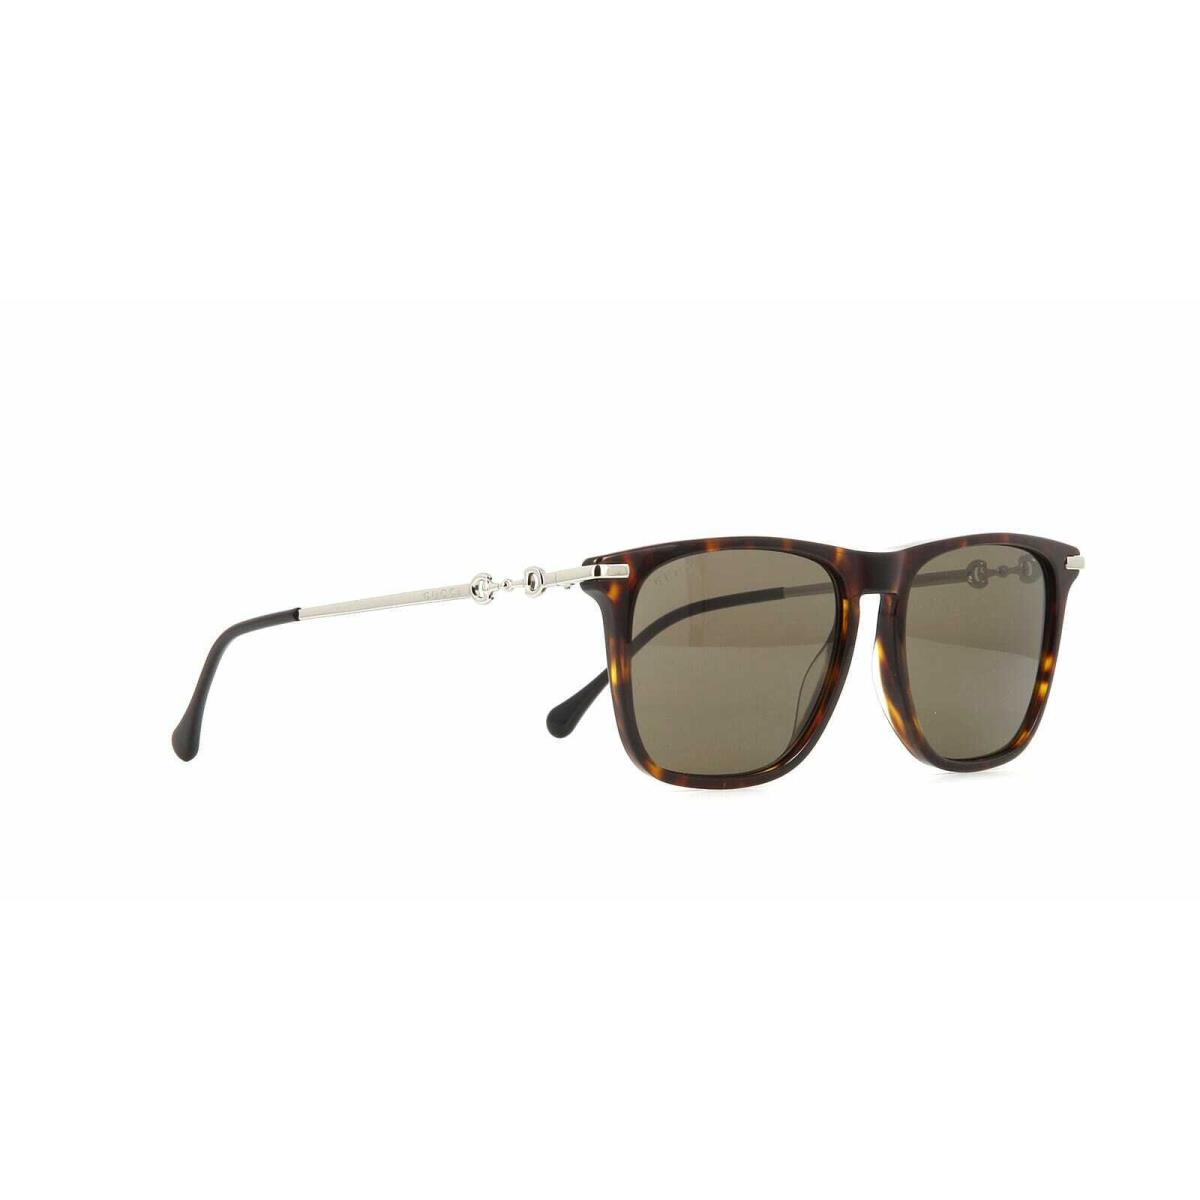 Gucci GG 0915S 002 Sunglasses Havana Silver Frame Brown Lenses 55mm